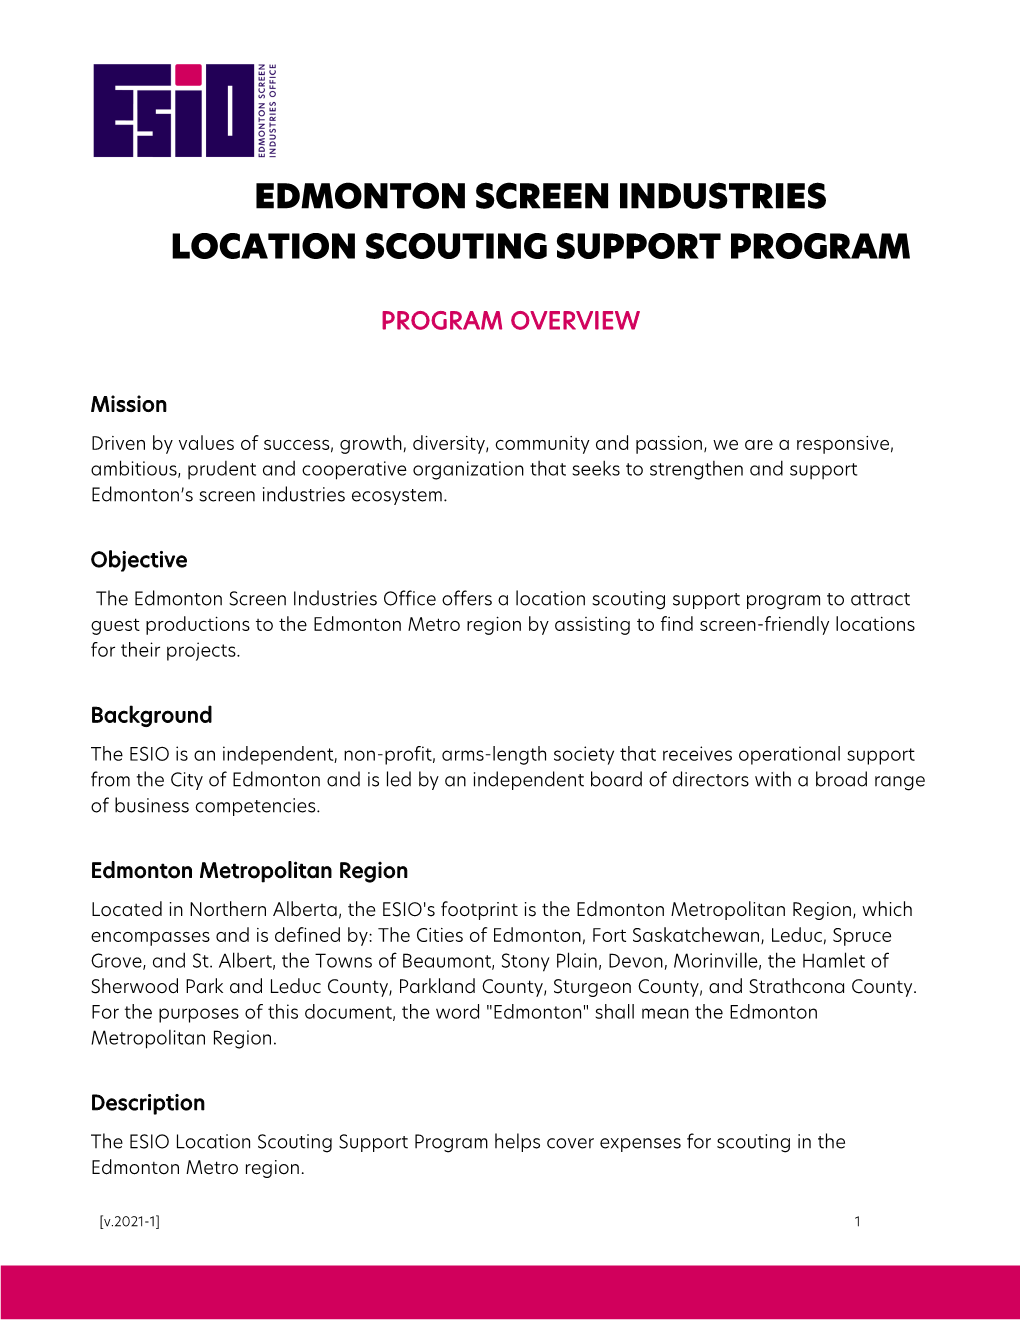 Edmonton Screen Industries Location Scouting Support Program